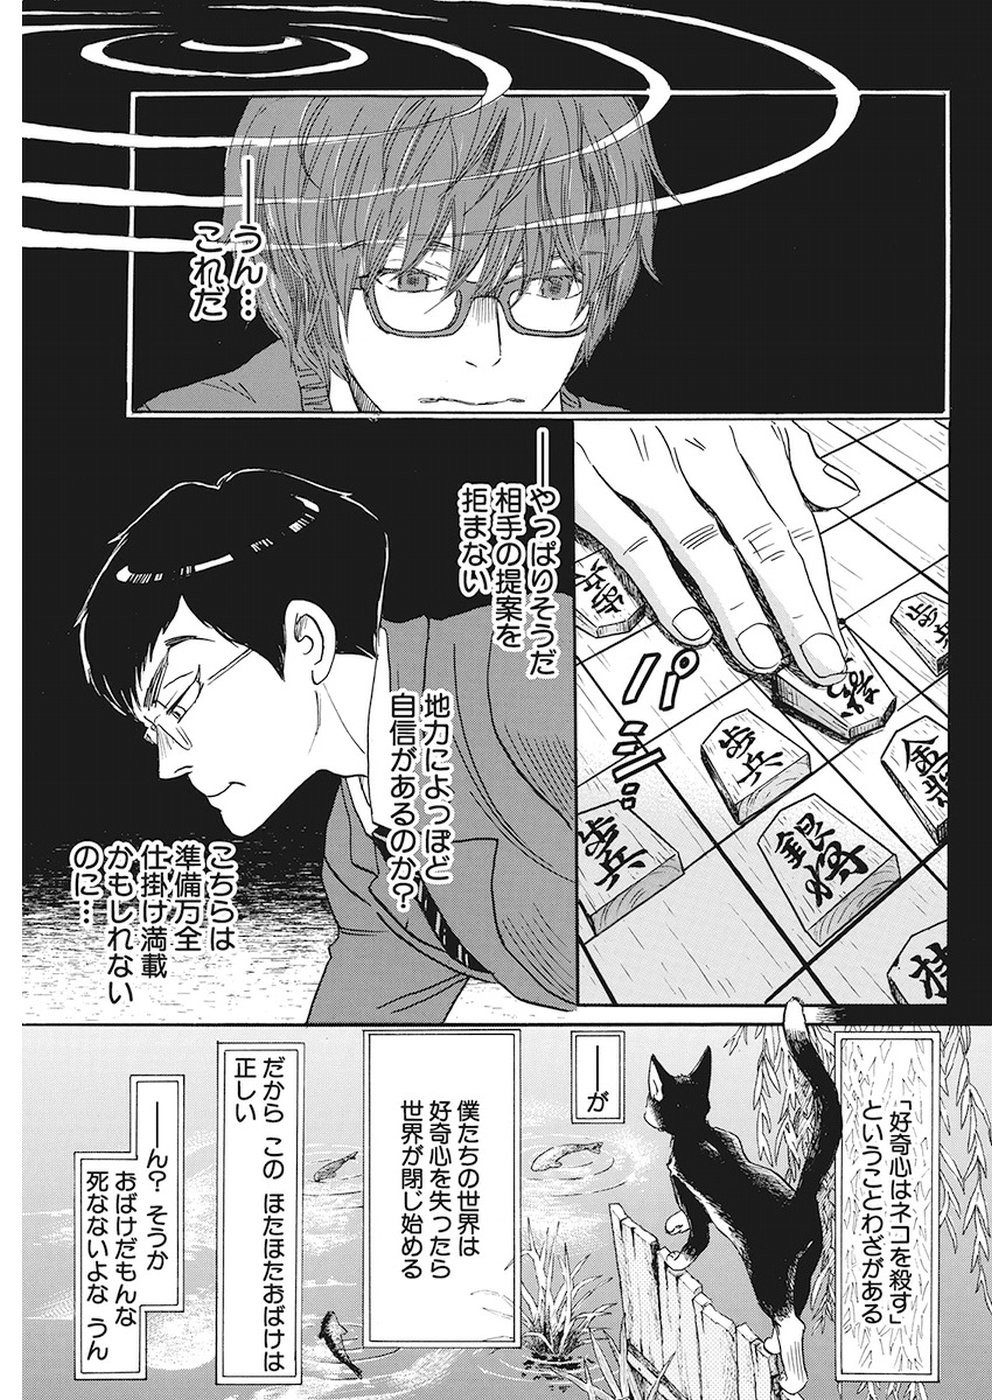 3 Gatsu no Lion - Chapter 158 - Page 5